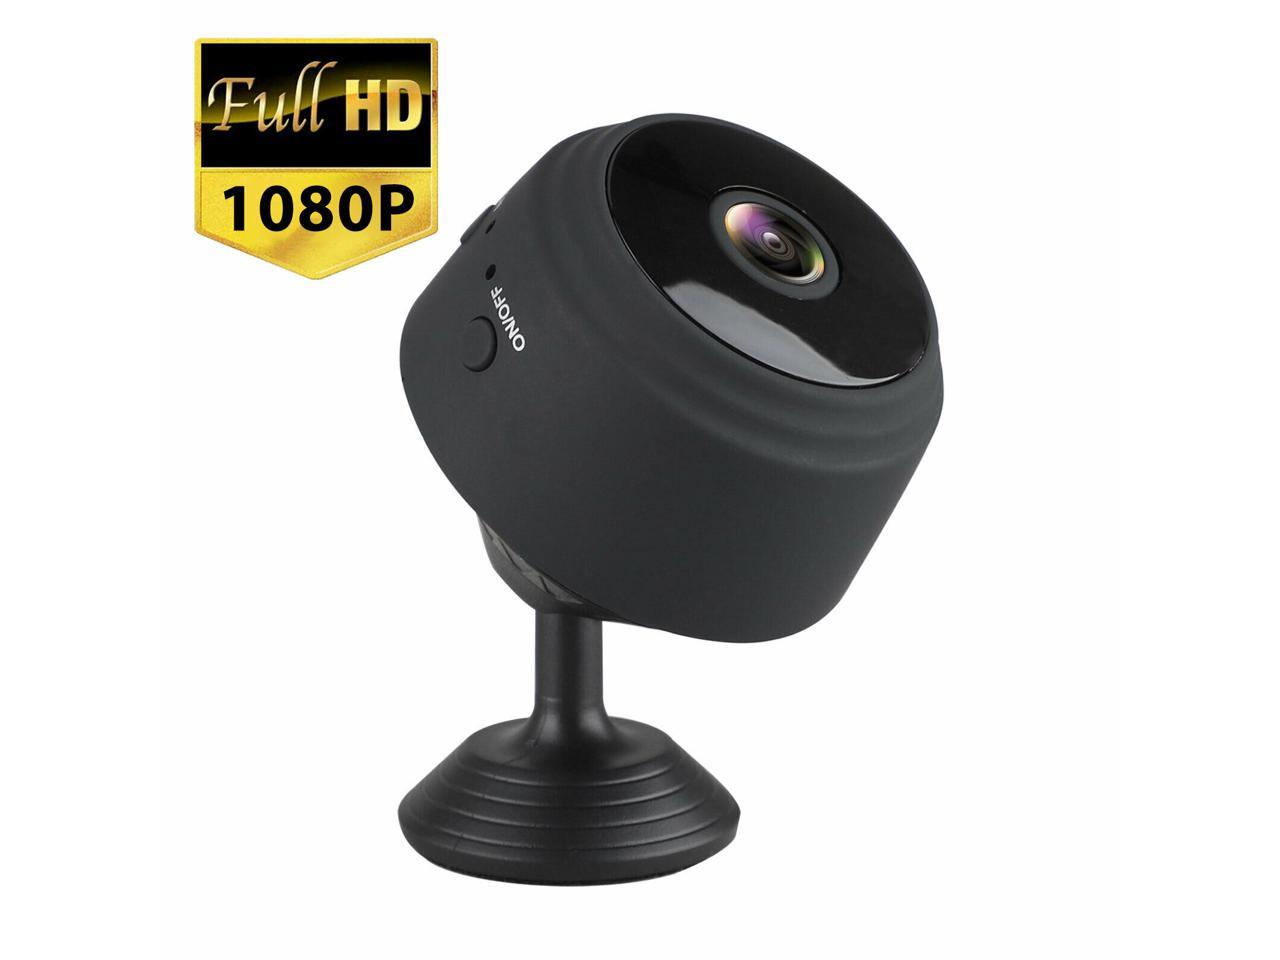 Portable Mini Hidden Spy Camera Security CCTV System Surveillance Night Vision